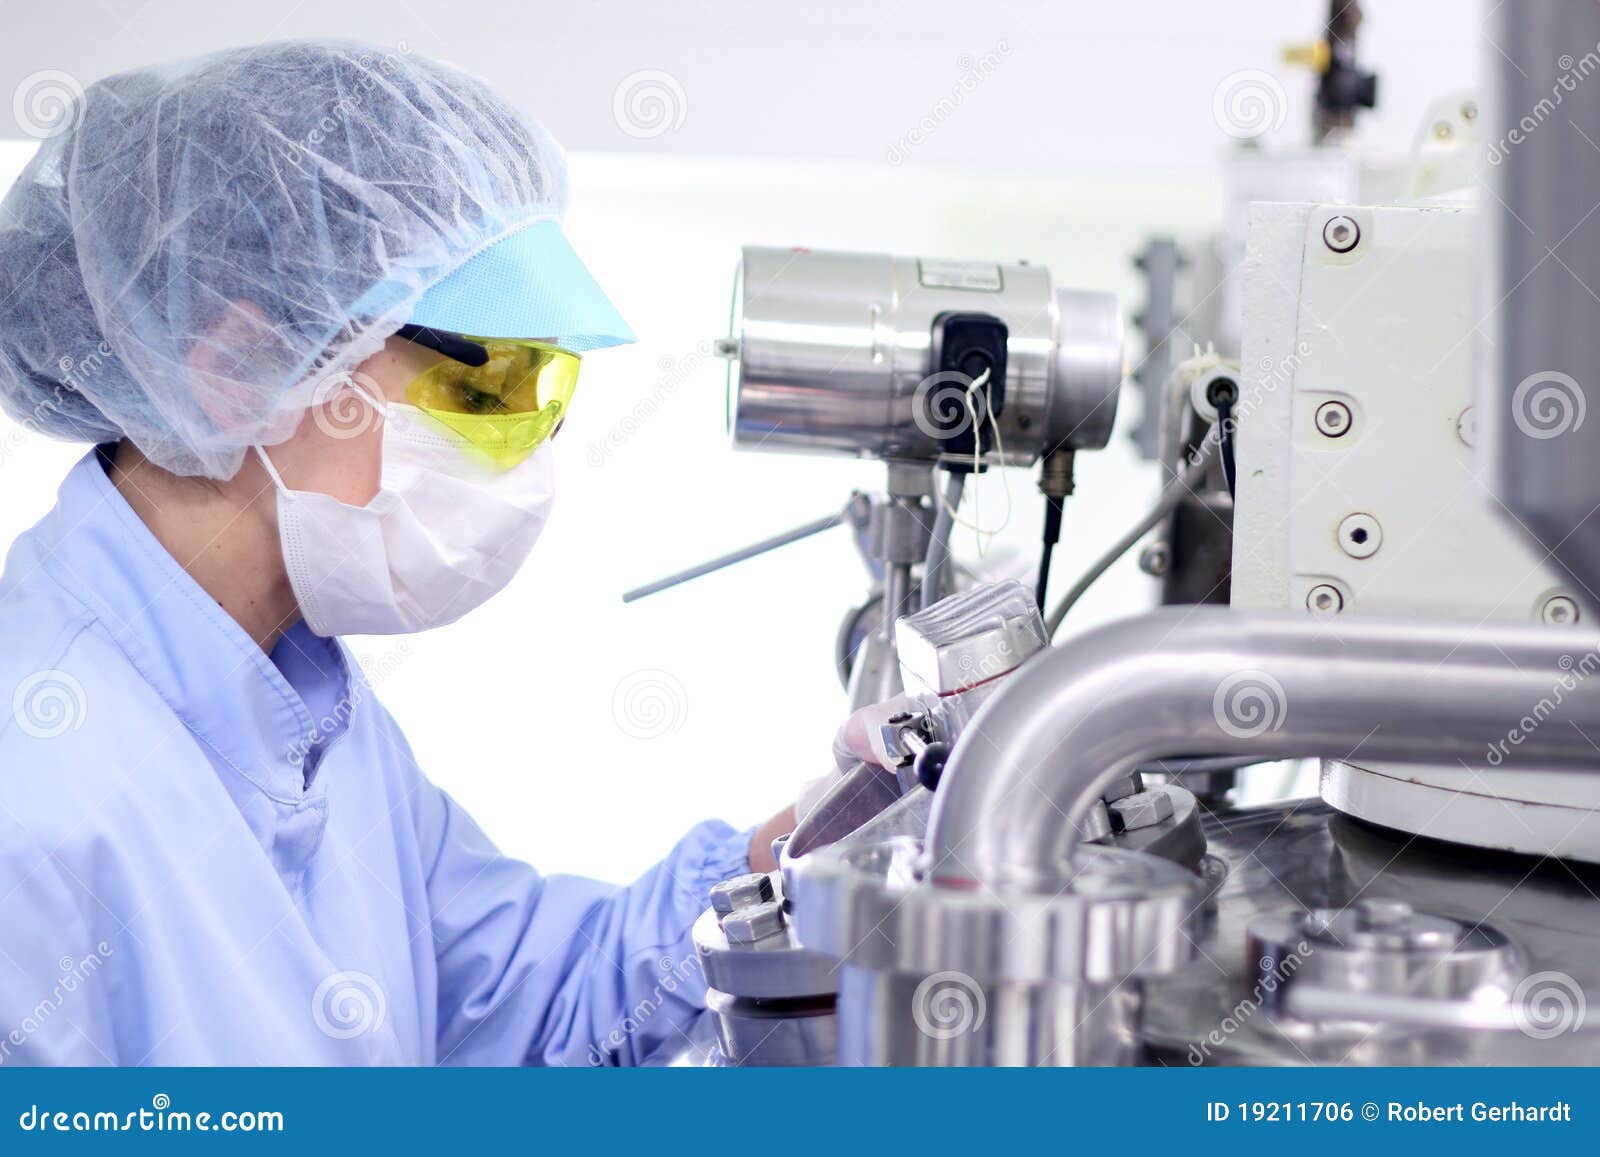 sterile environment - pharmaceutical factory